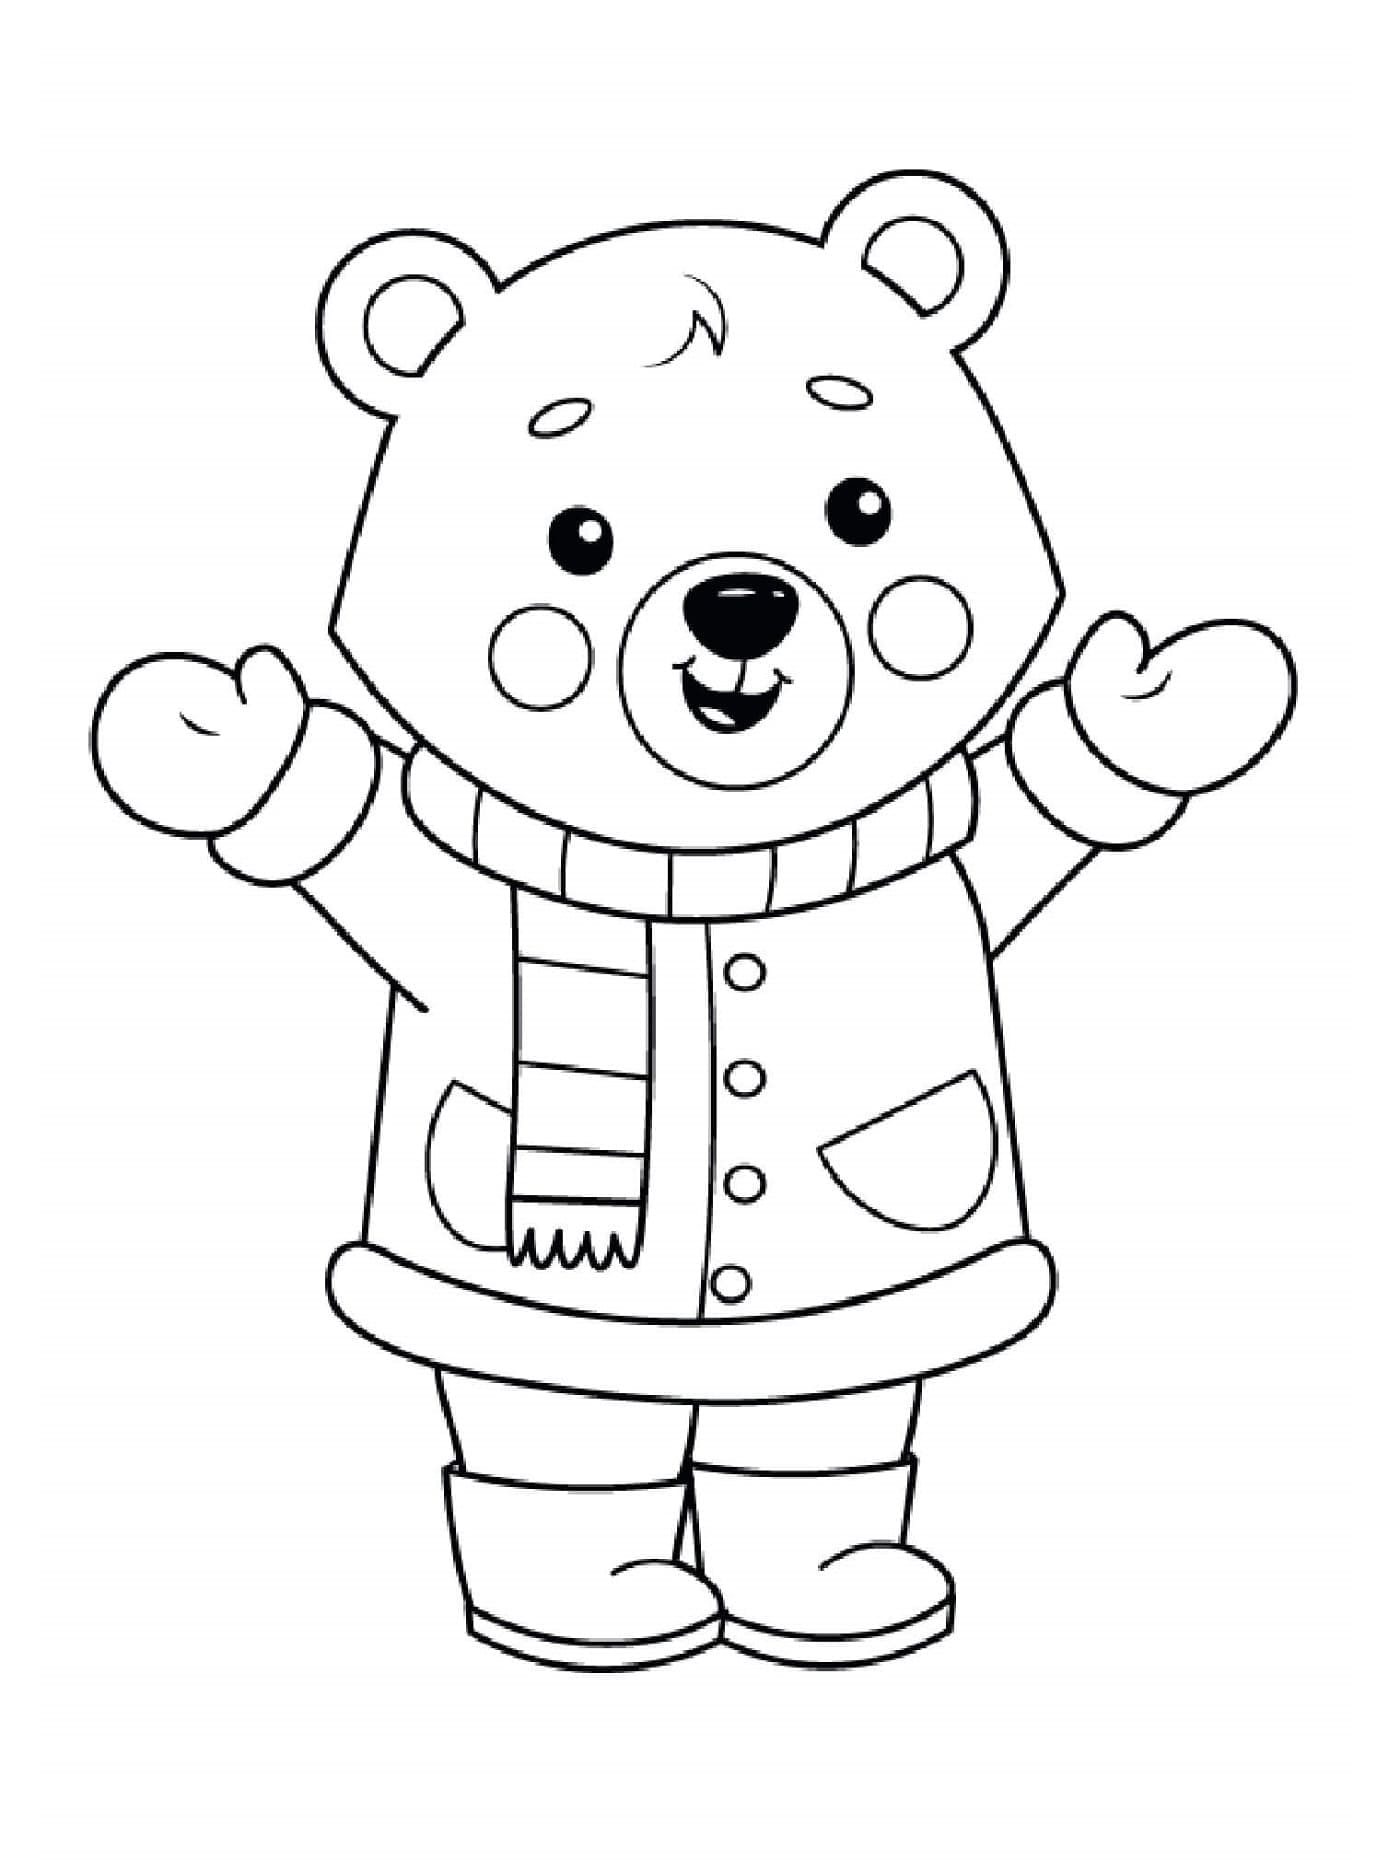 Printable Fun Cartoon Teddy Bear Coloring Page